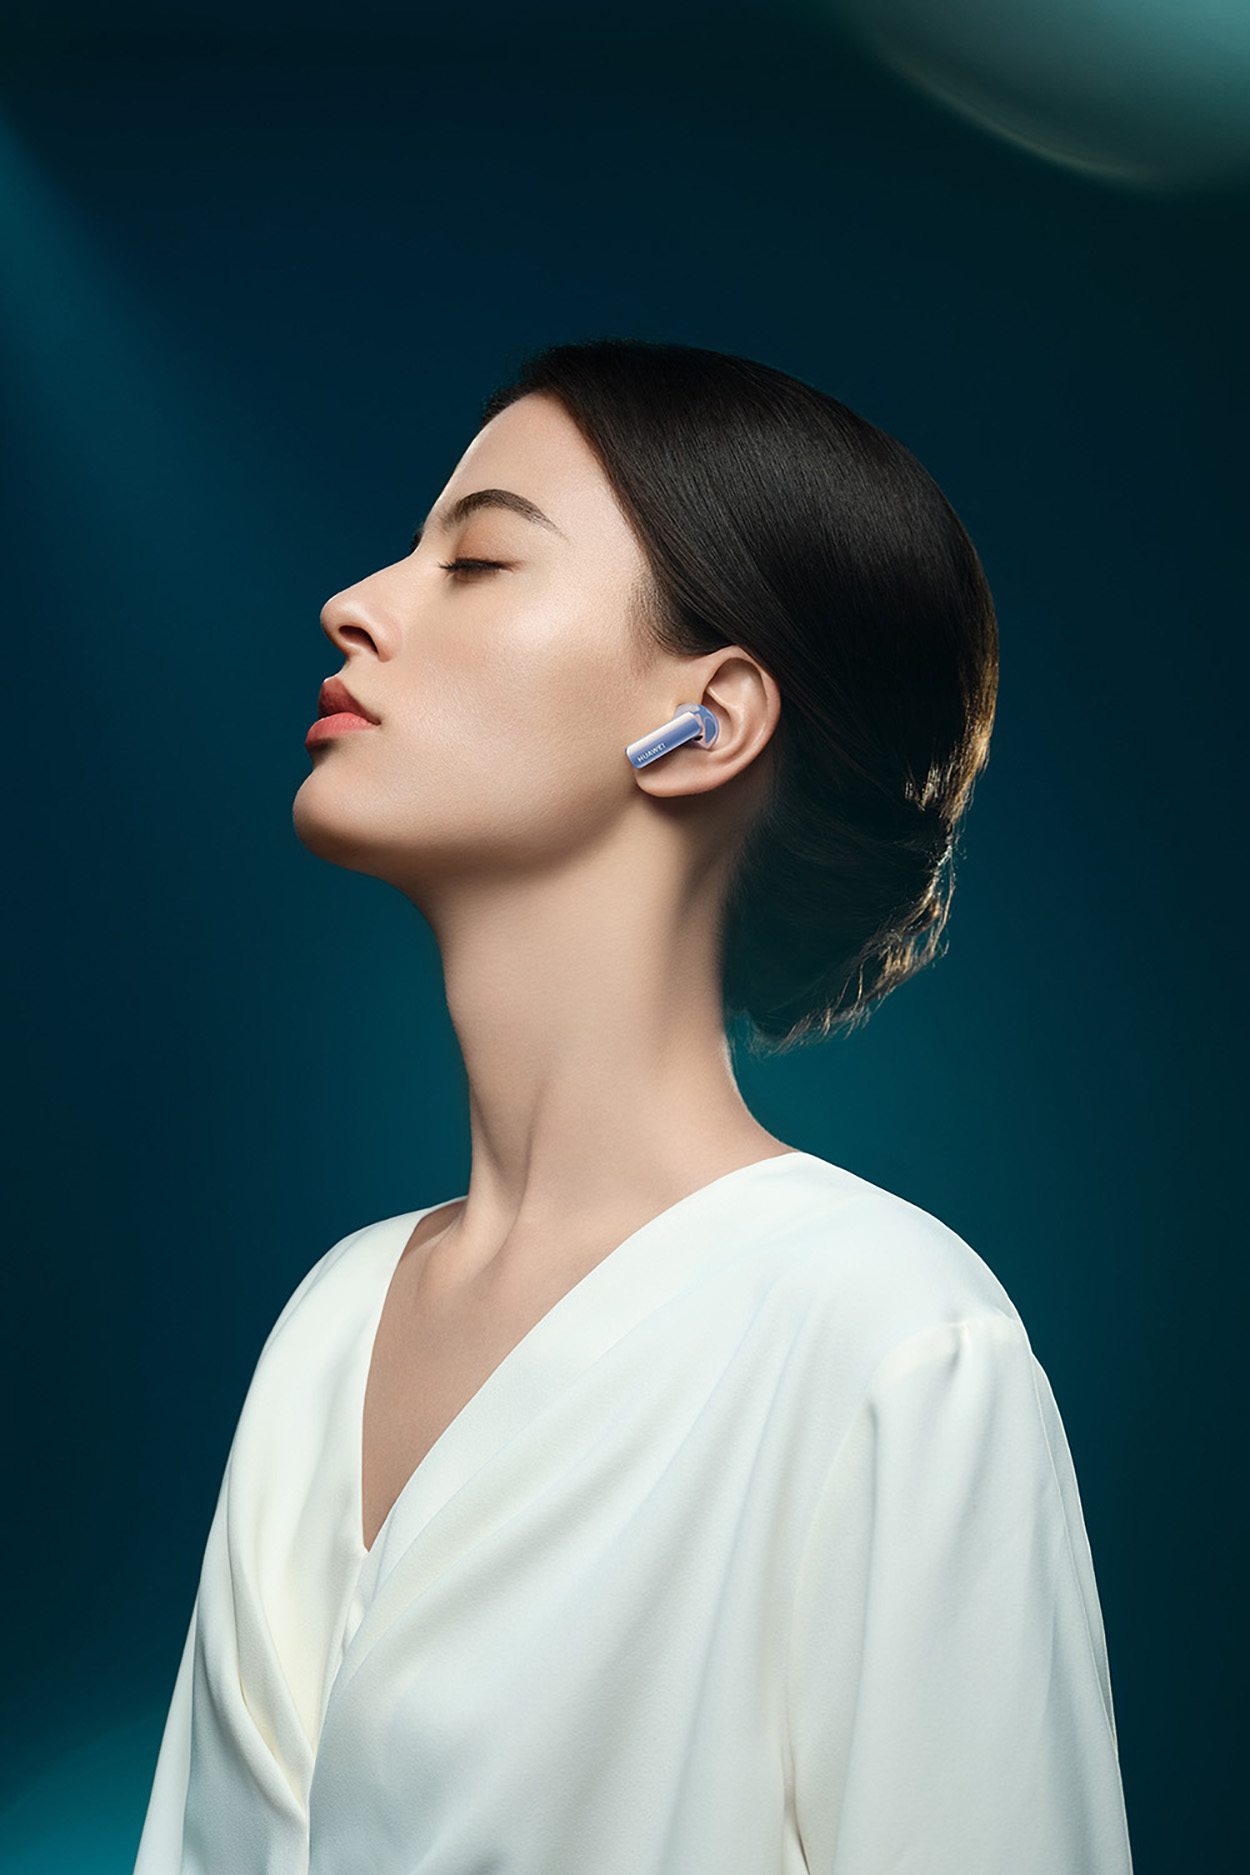 Pro FreeBuds In-ear blau Kopfhörer HUAWEI 2, Bluetooth